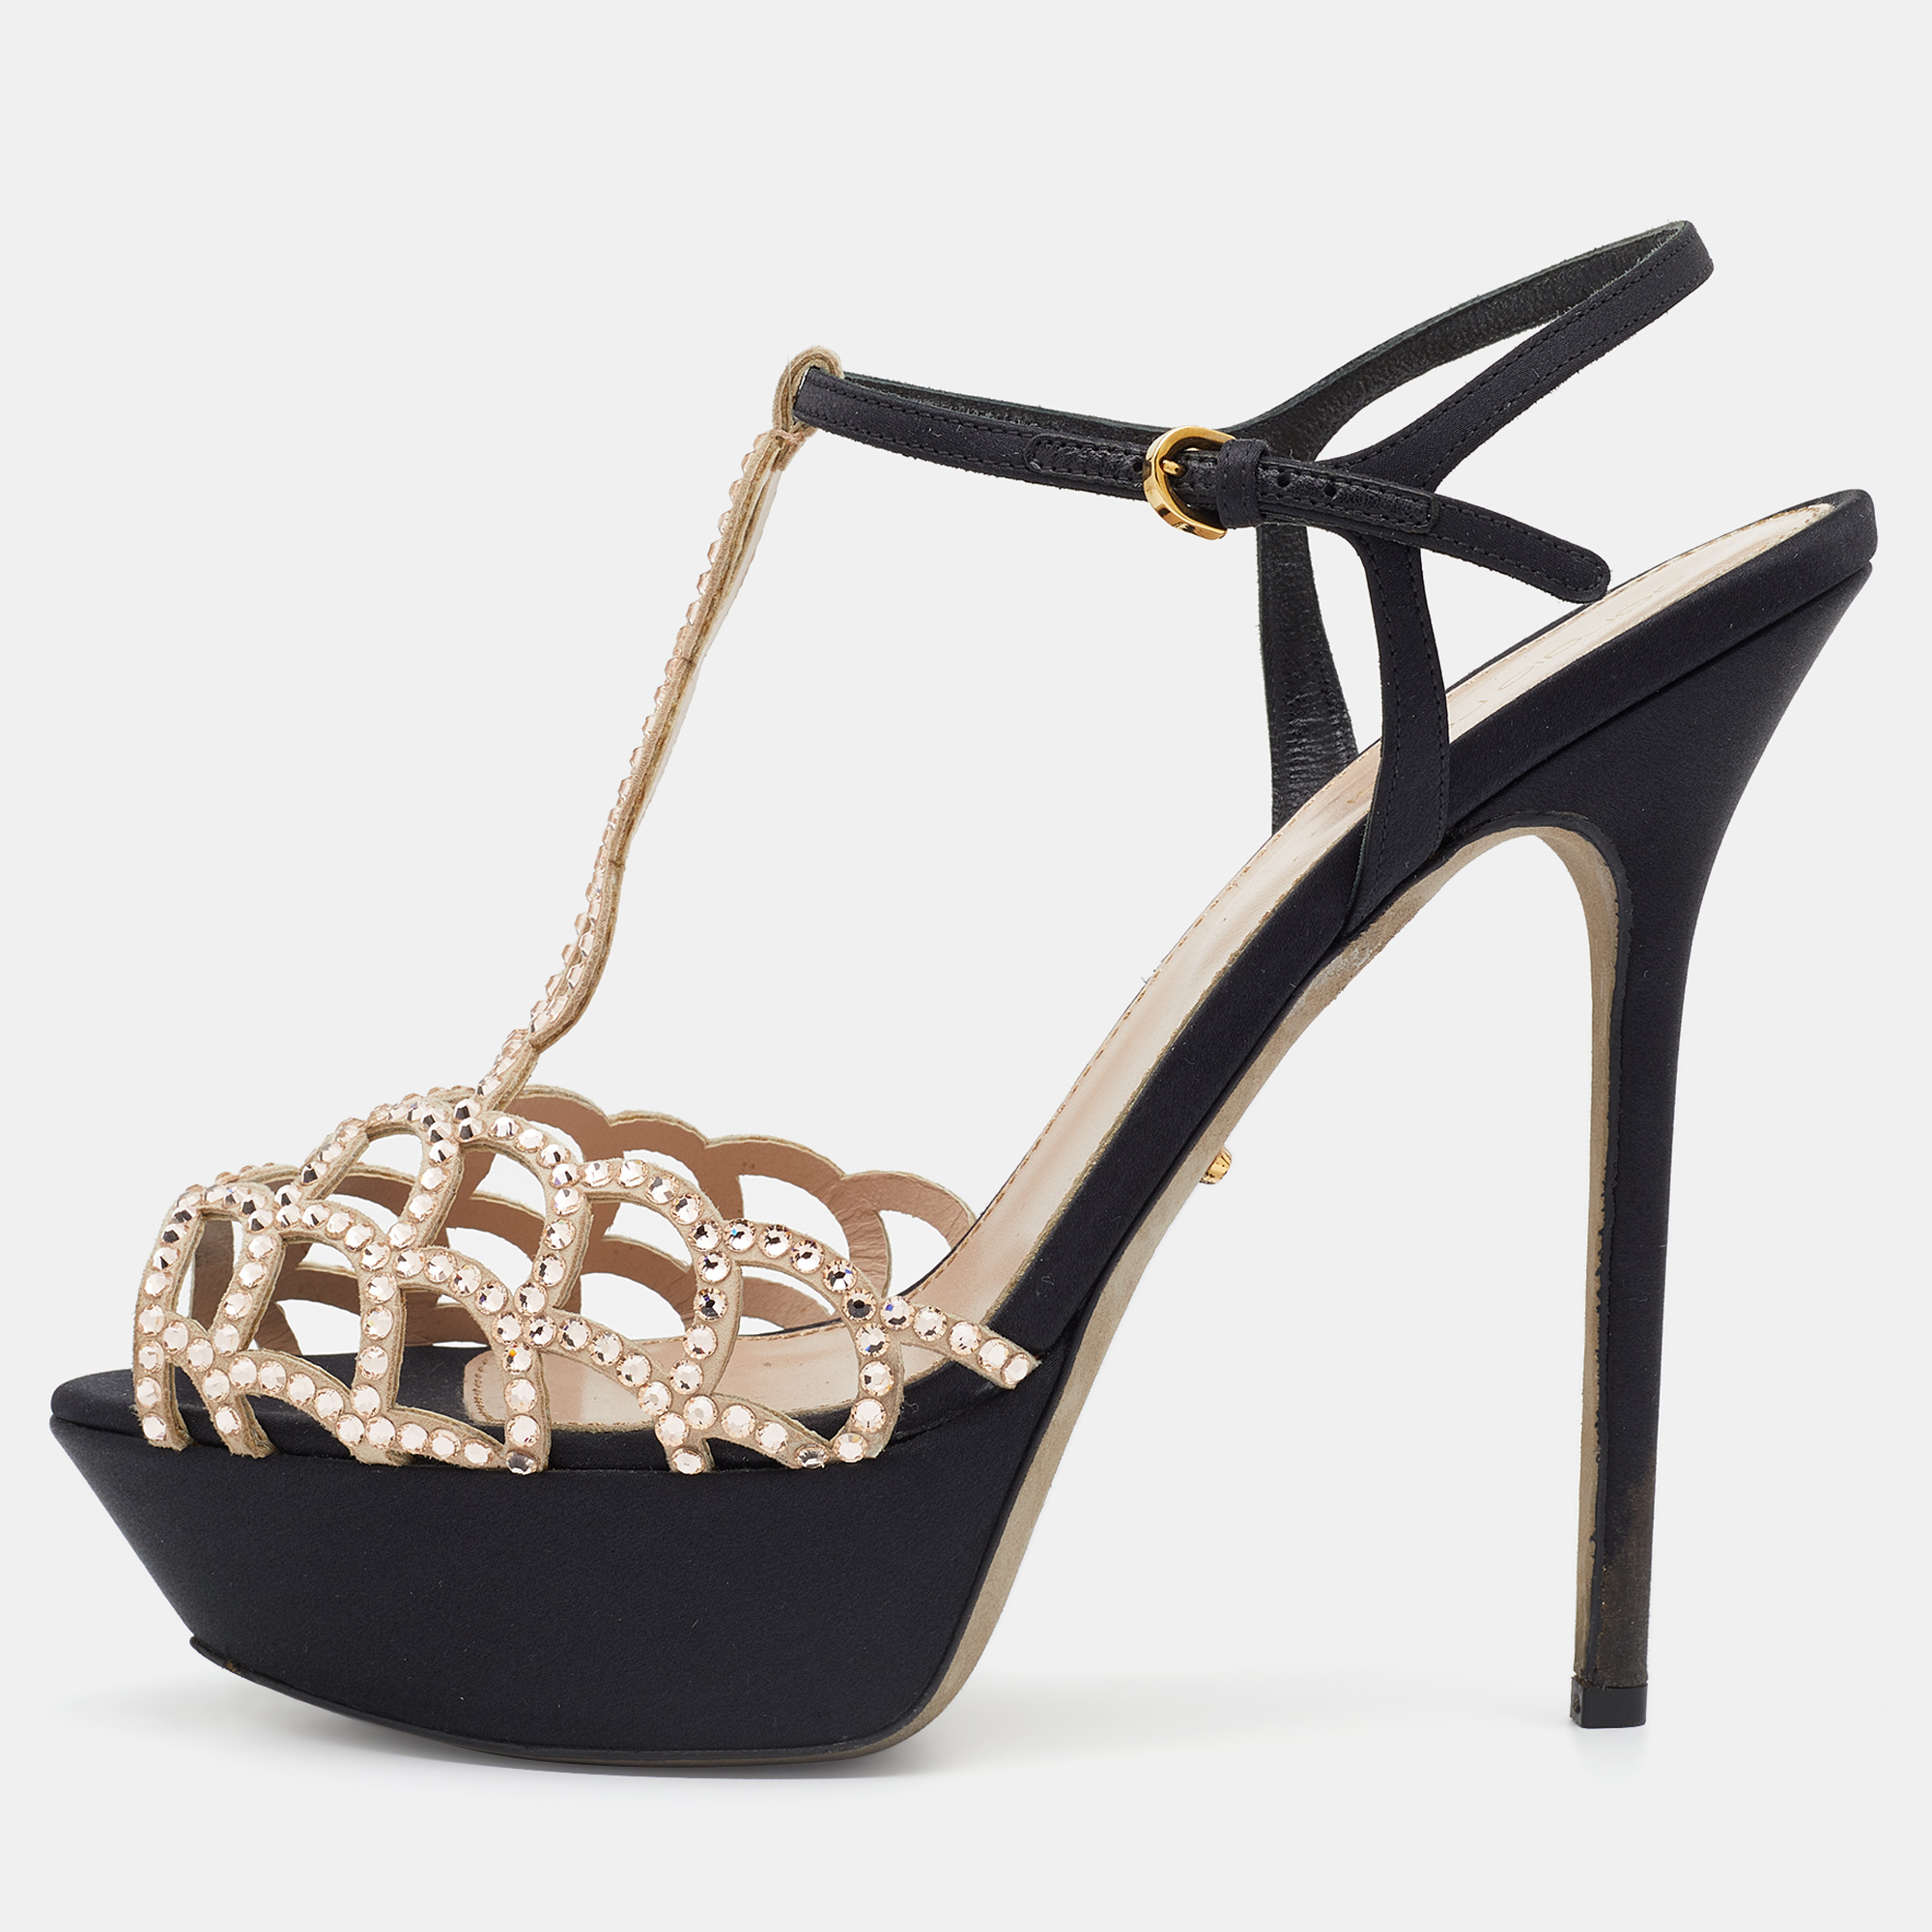 Sergio rossi black/beige satin and suede crystal embellished strappy scalloped platform sandals size 40